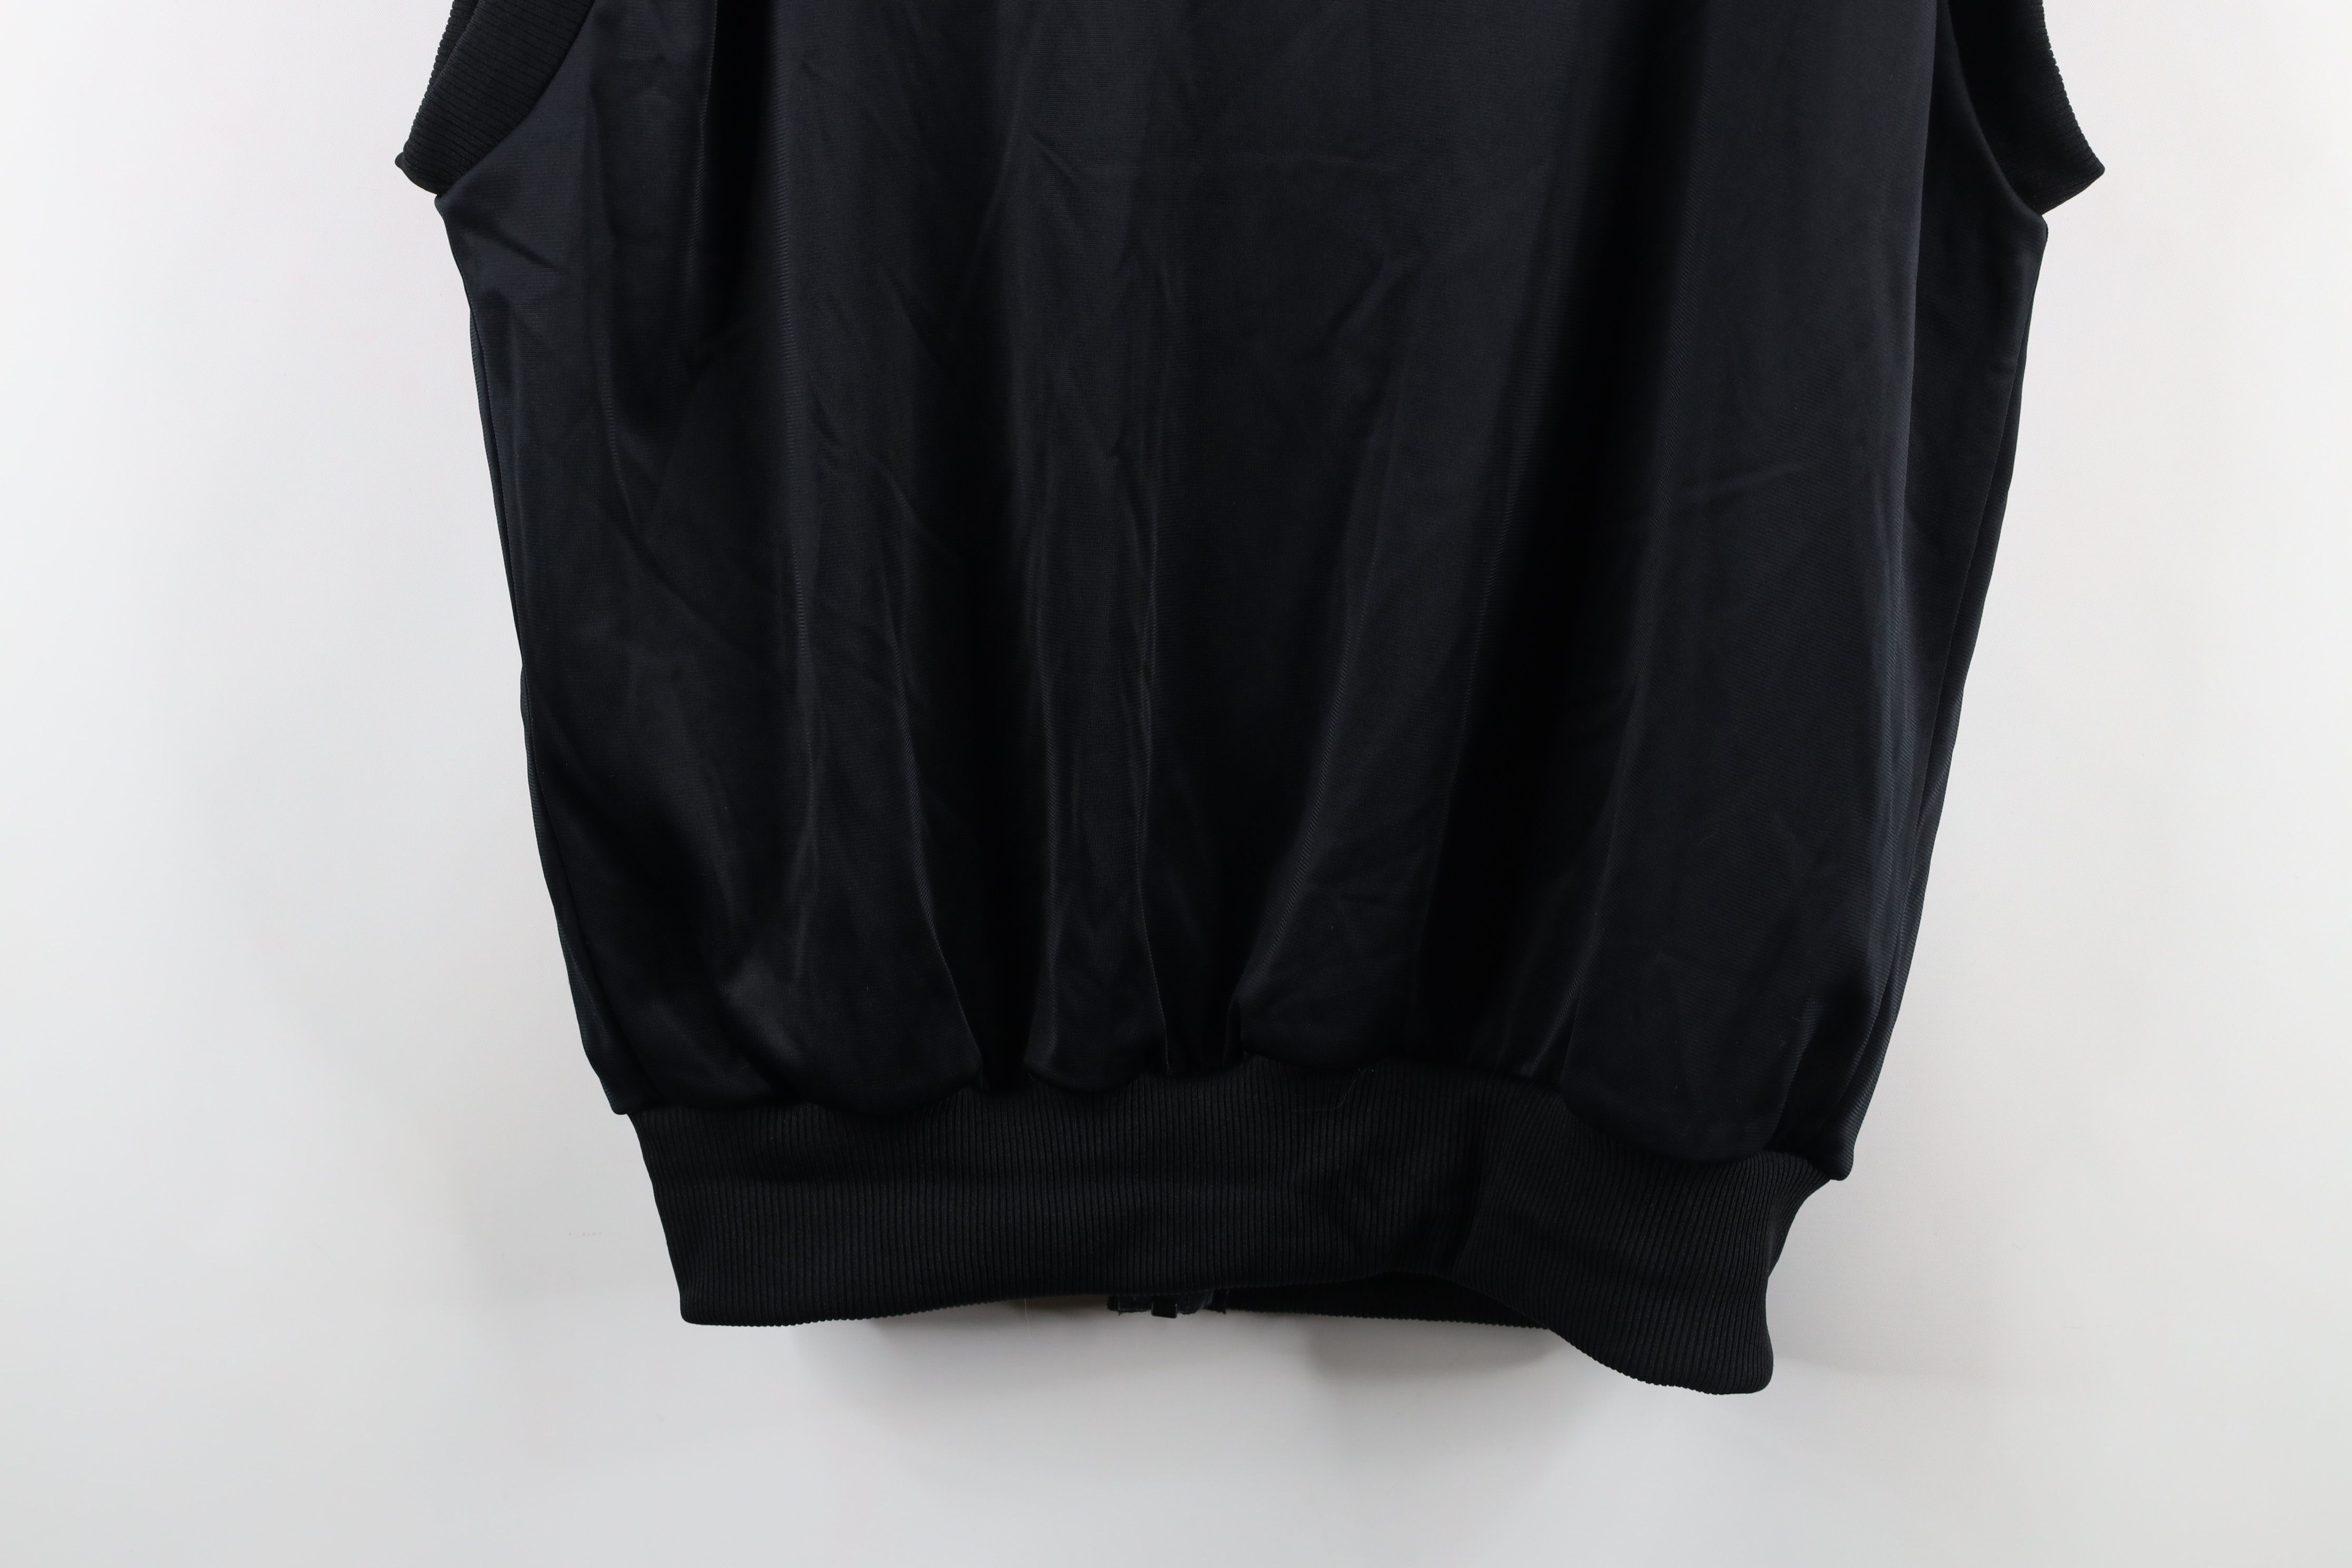 Vintage Vintage 80s Puma Full Zip Fleece Lined Vest Jacket Black Size US XL / EU 56 / 4 - 9 Preview